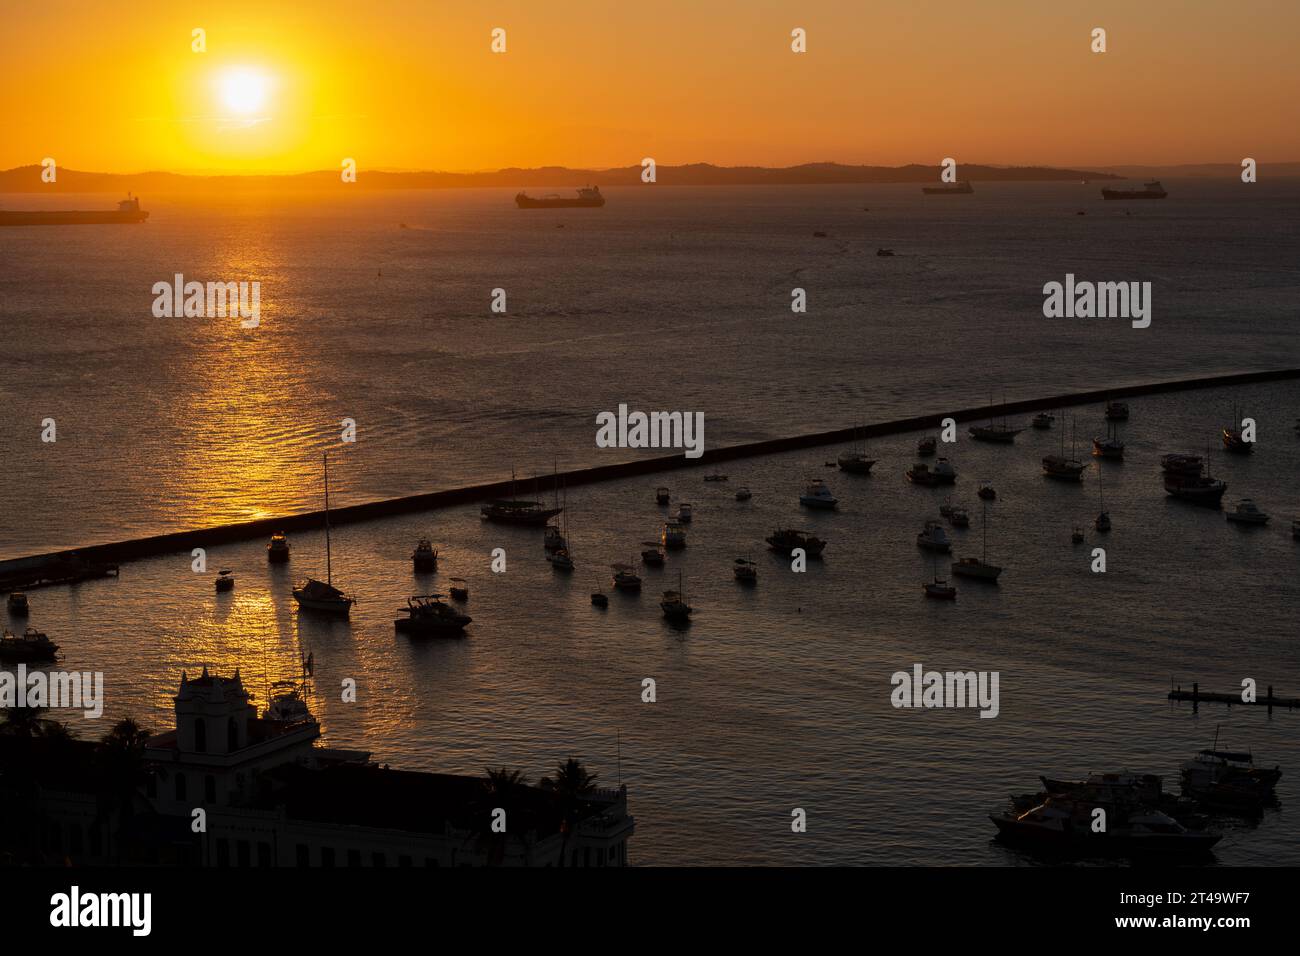 Salvador, Bahia, Brasilien - 21. April 2015: Wunderschöner dramatischer Sonnenuntergang in der Stadt Salvador, Bahia. Stockfoto